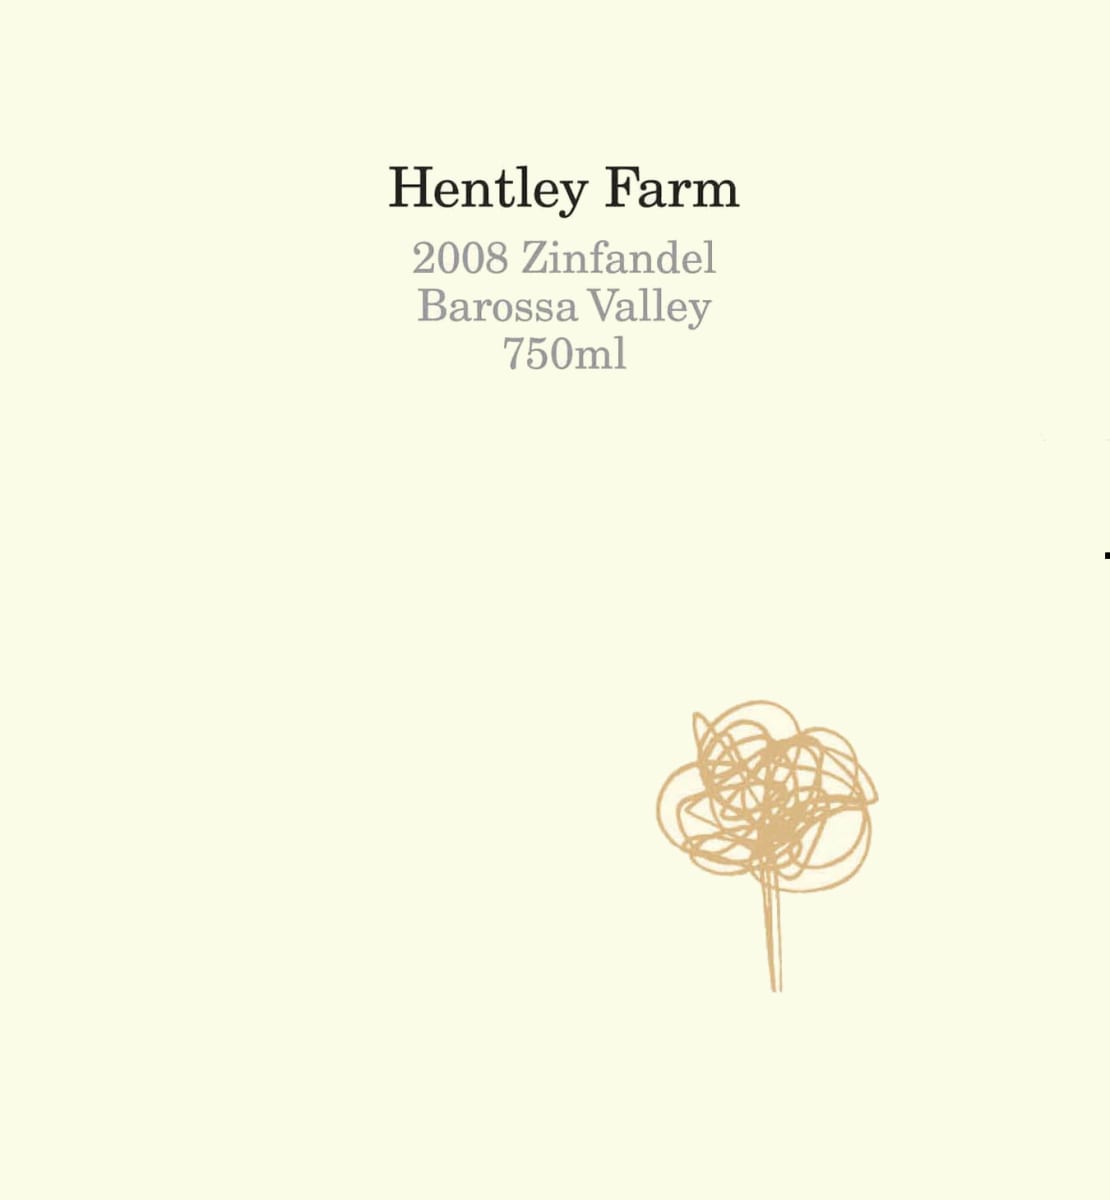 Hentley Farm Zinfandel 2008 Front Label